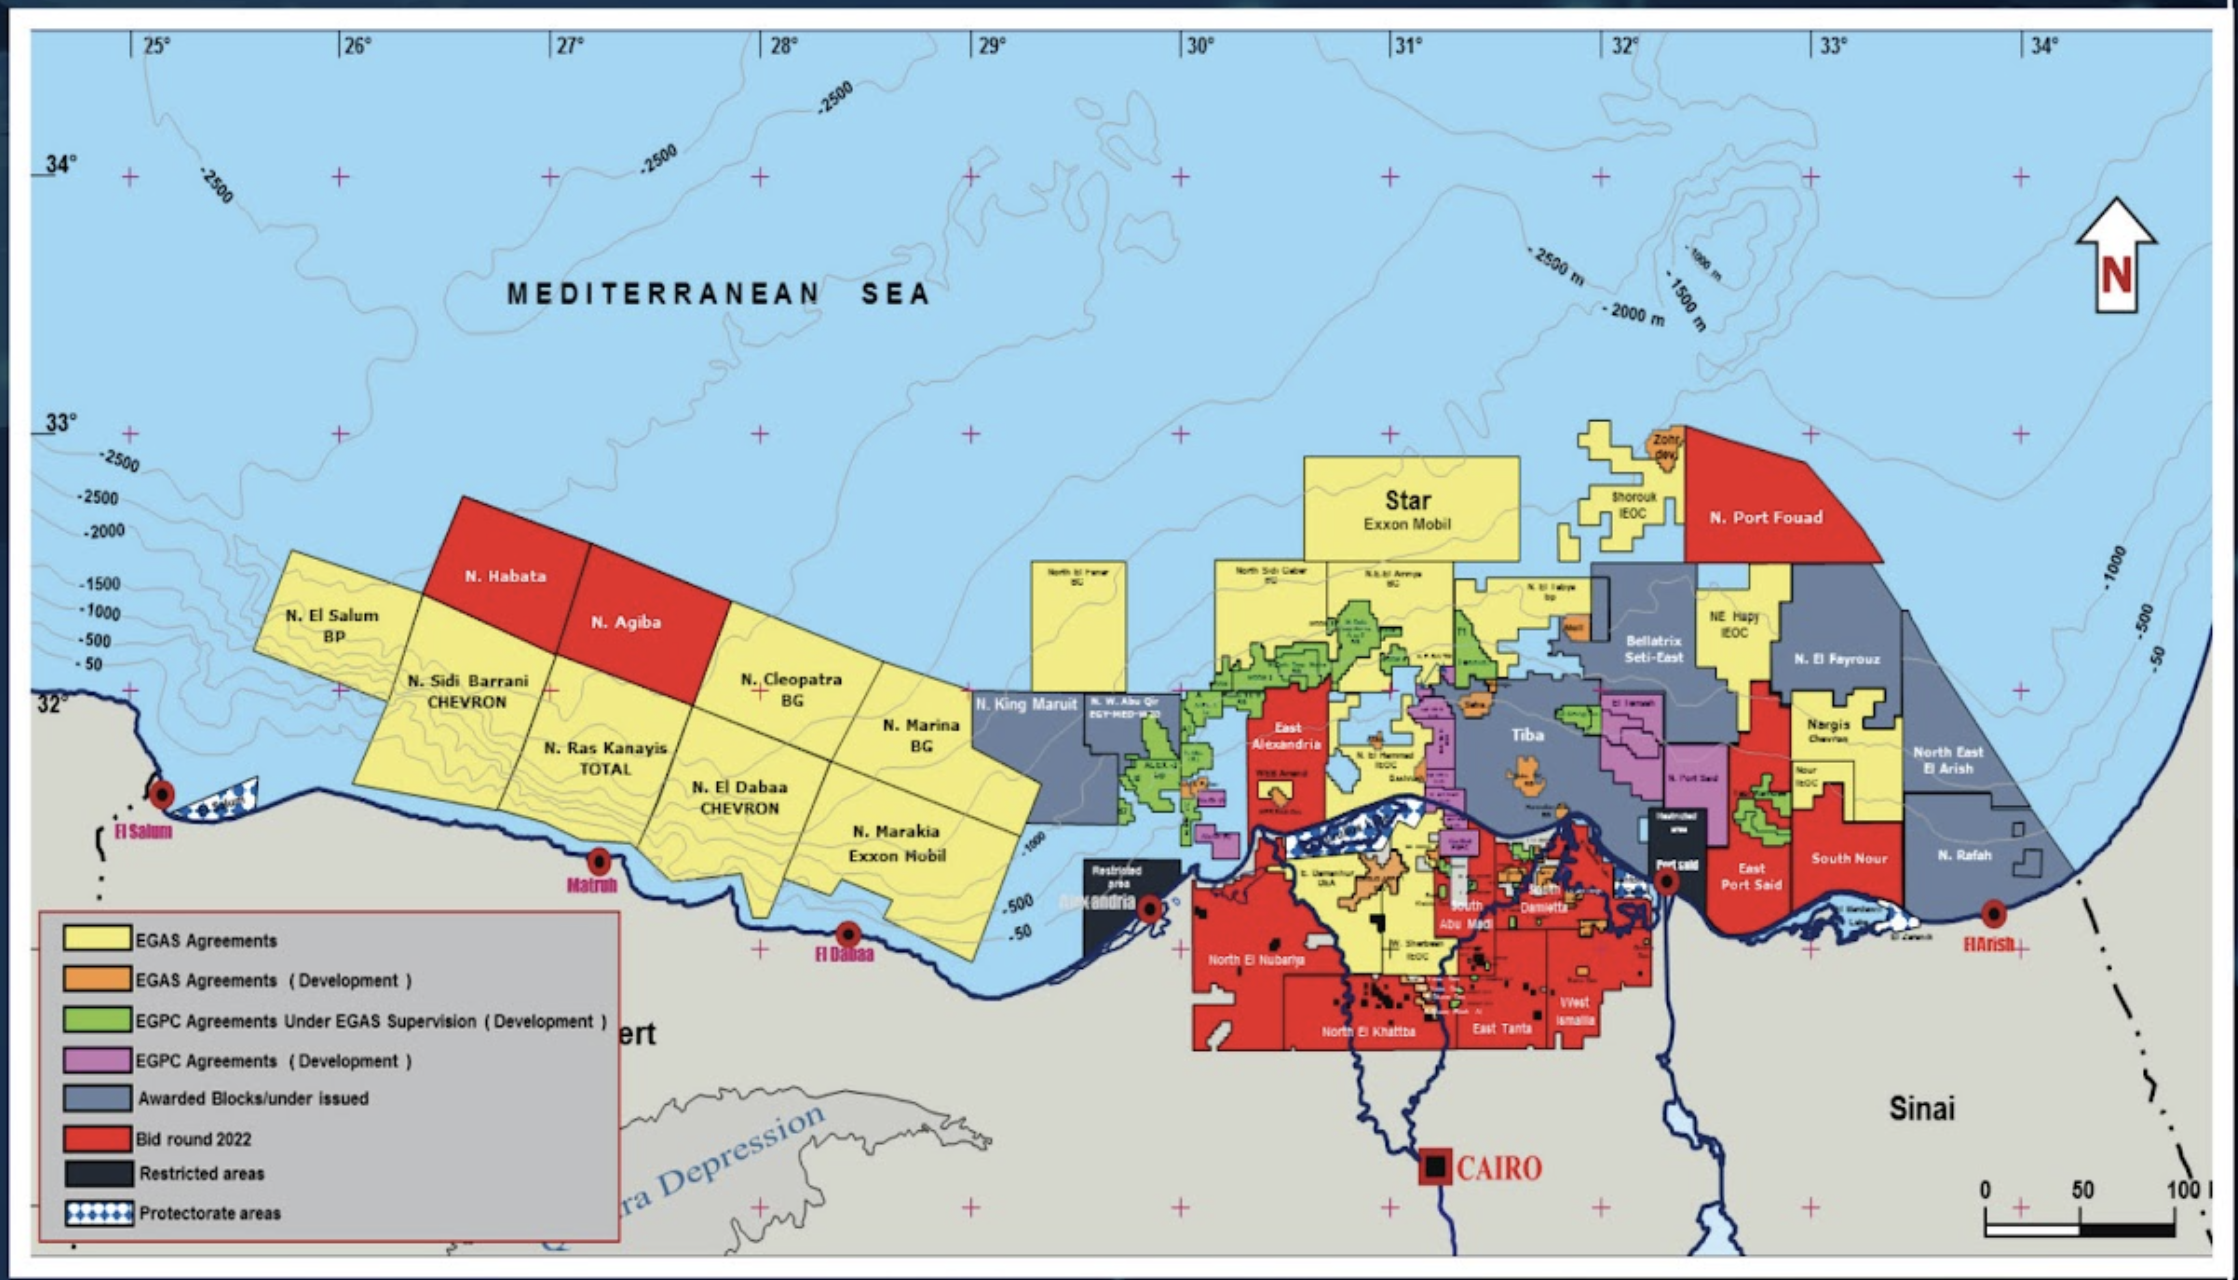 Blocks offshore Uruguay following the most recent bid round. (Source: ANCAP)